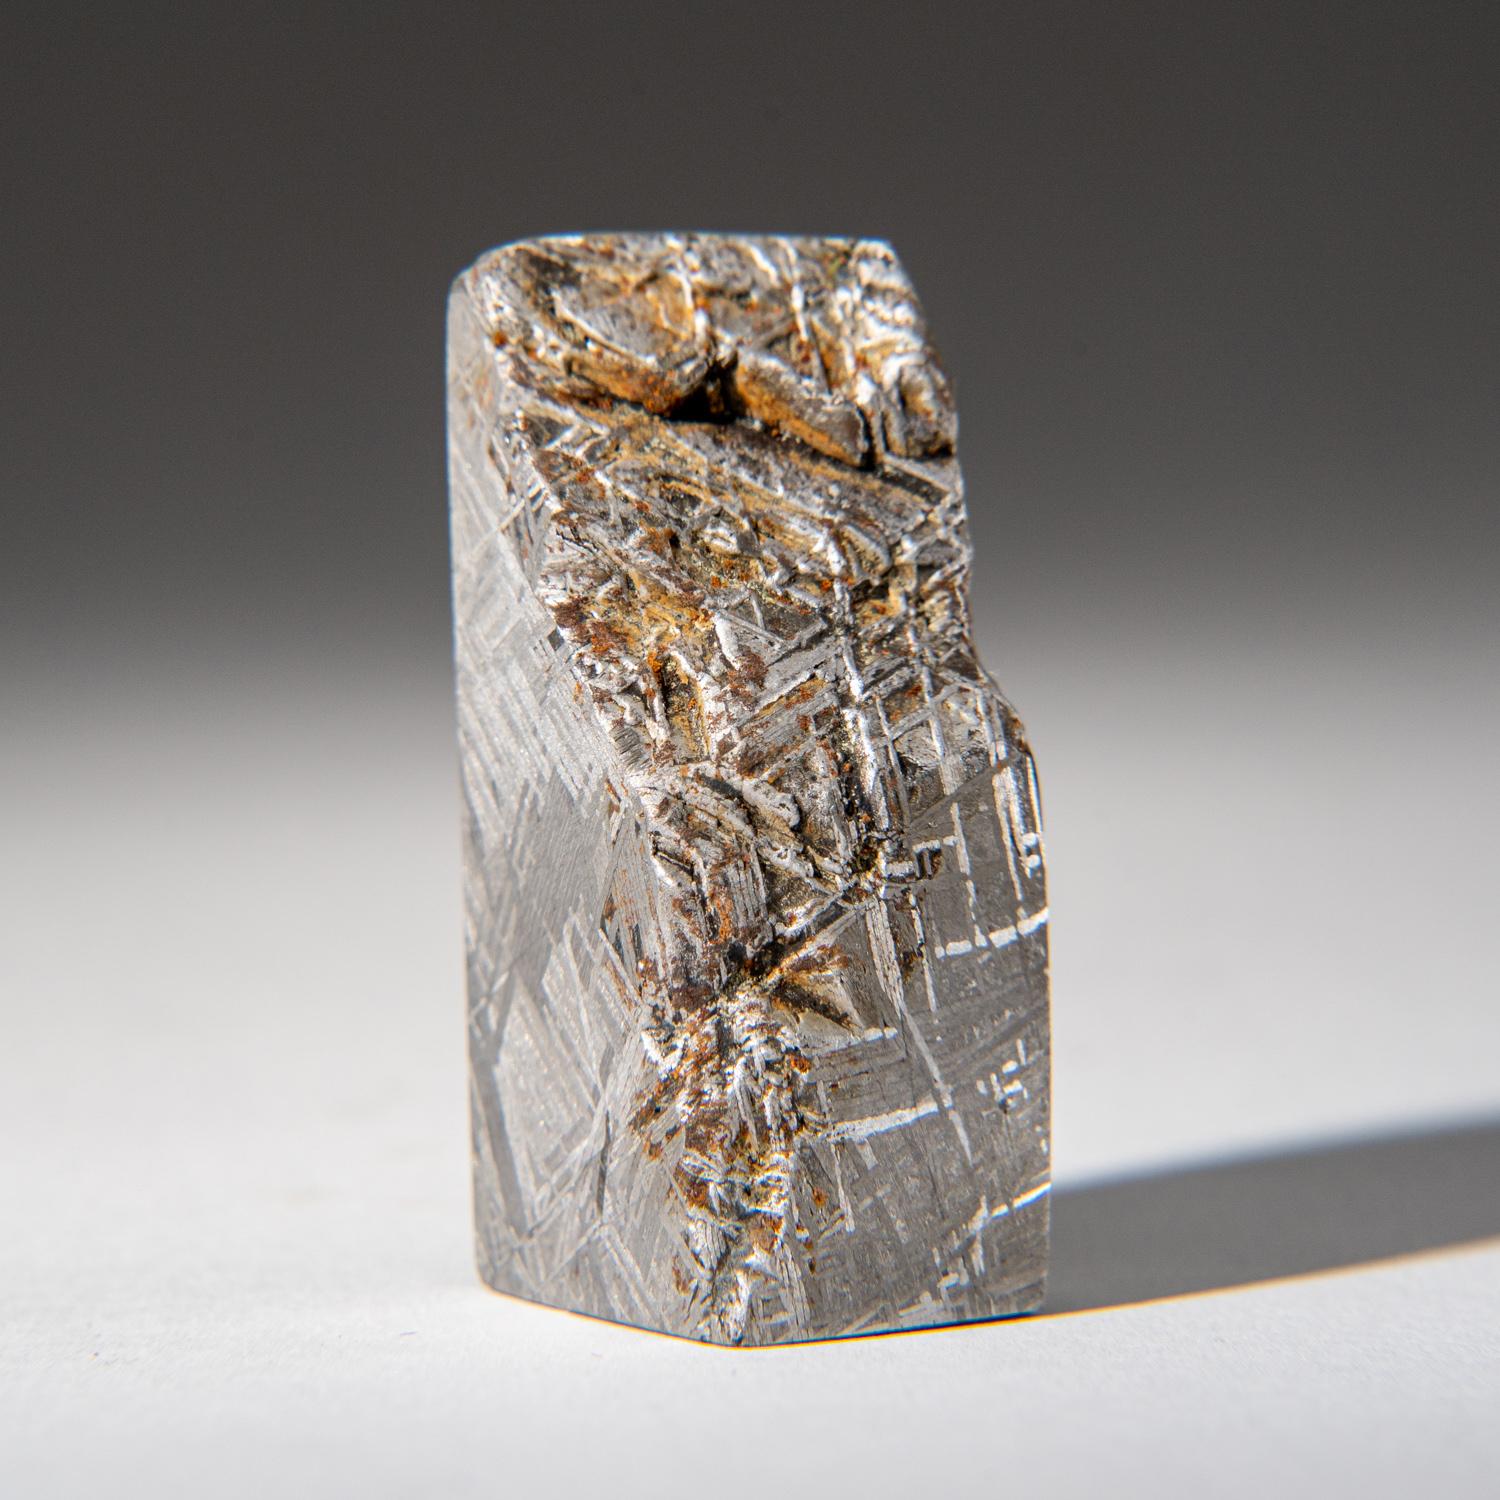 iron meteorite slice